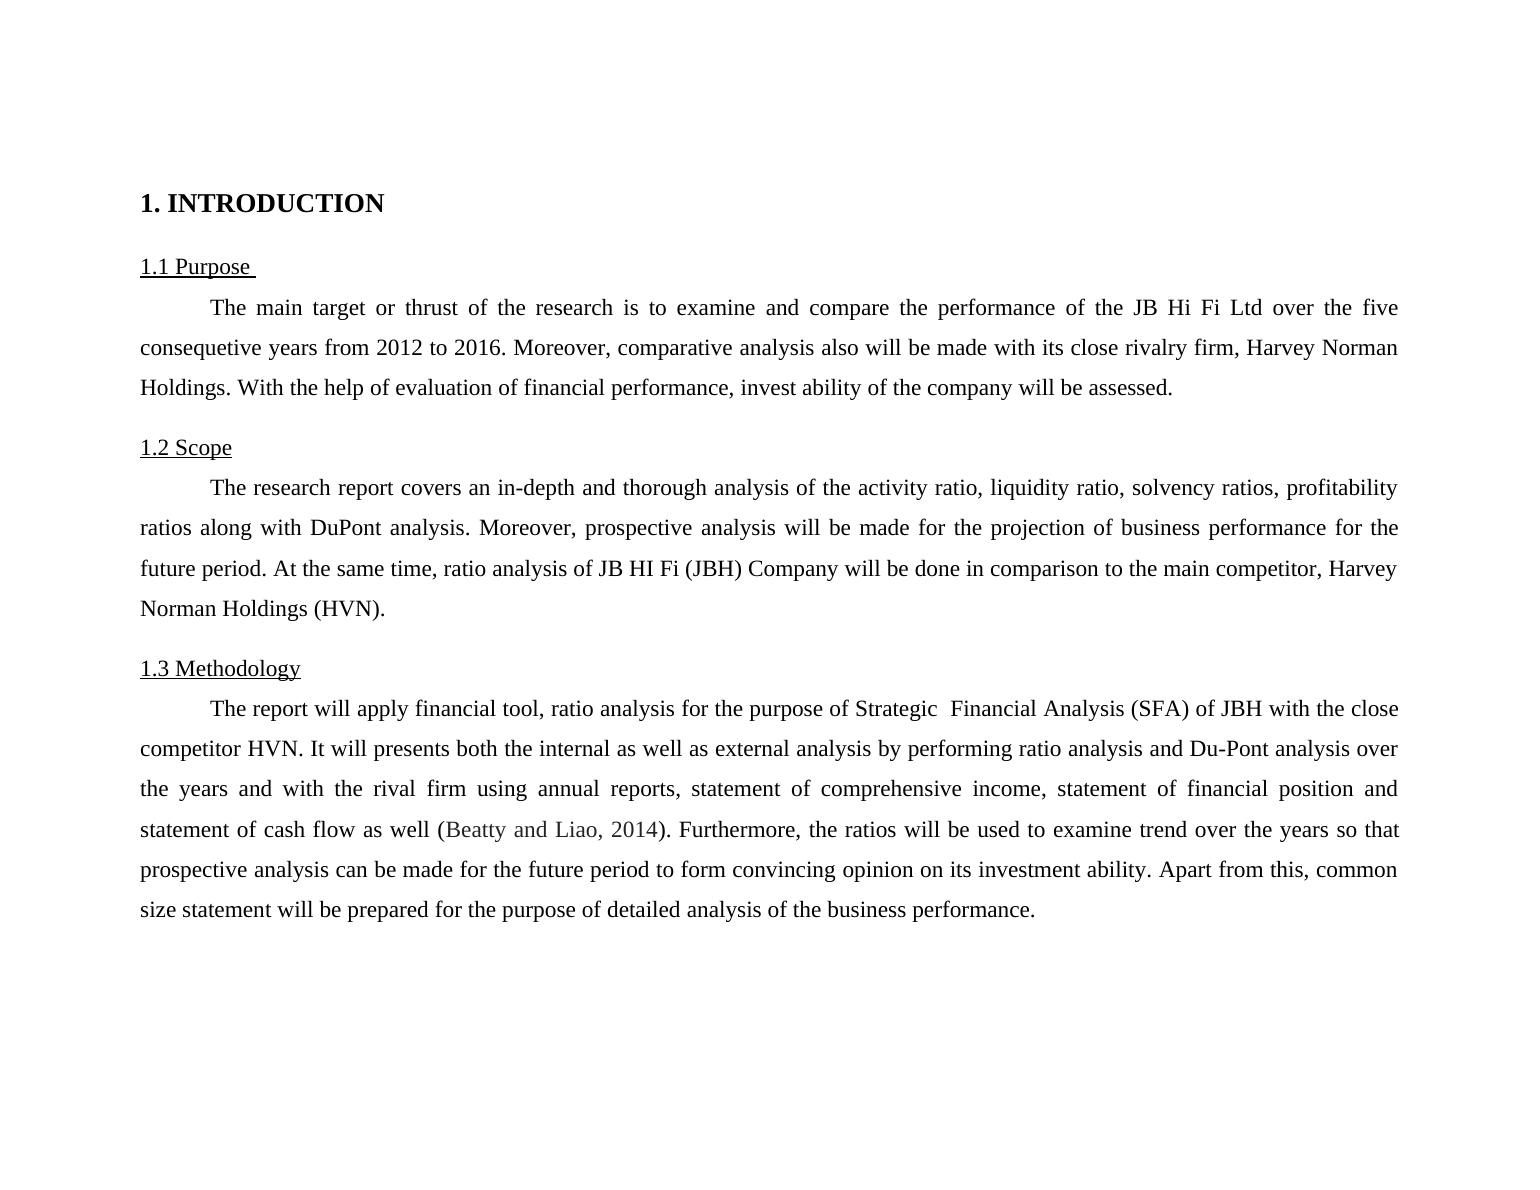 Research Report on Financial Analysis of JB Hi Fi Ltd_5